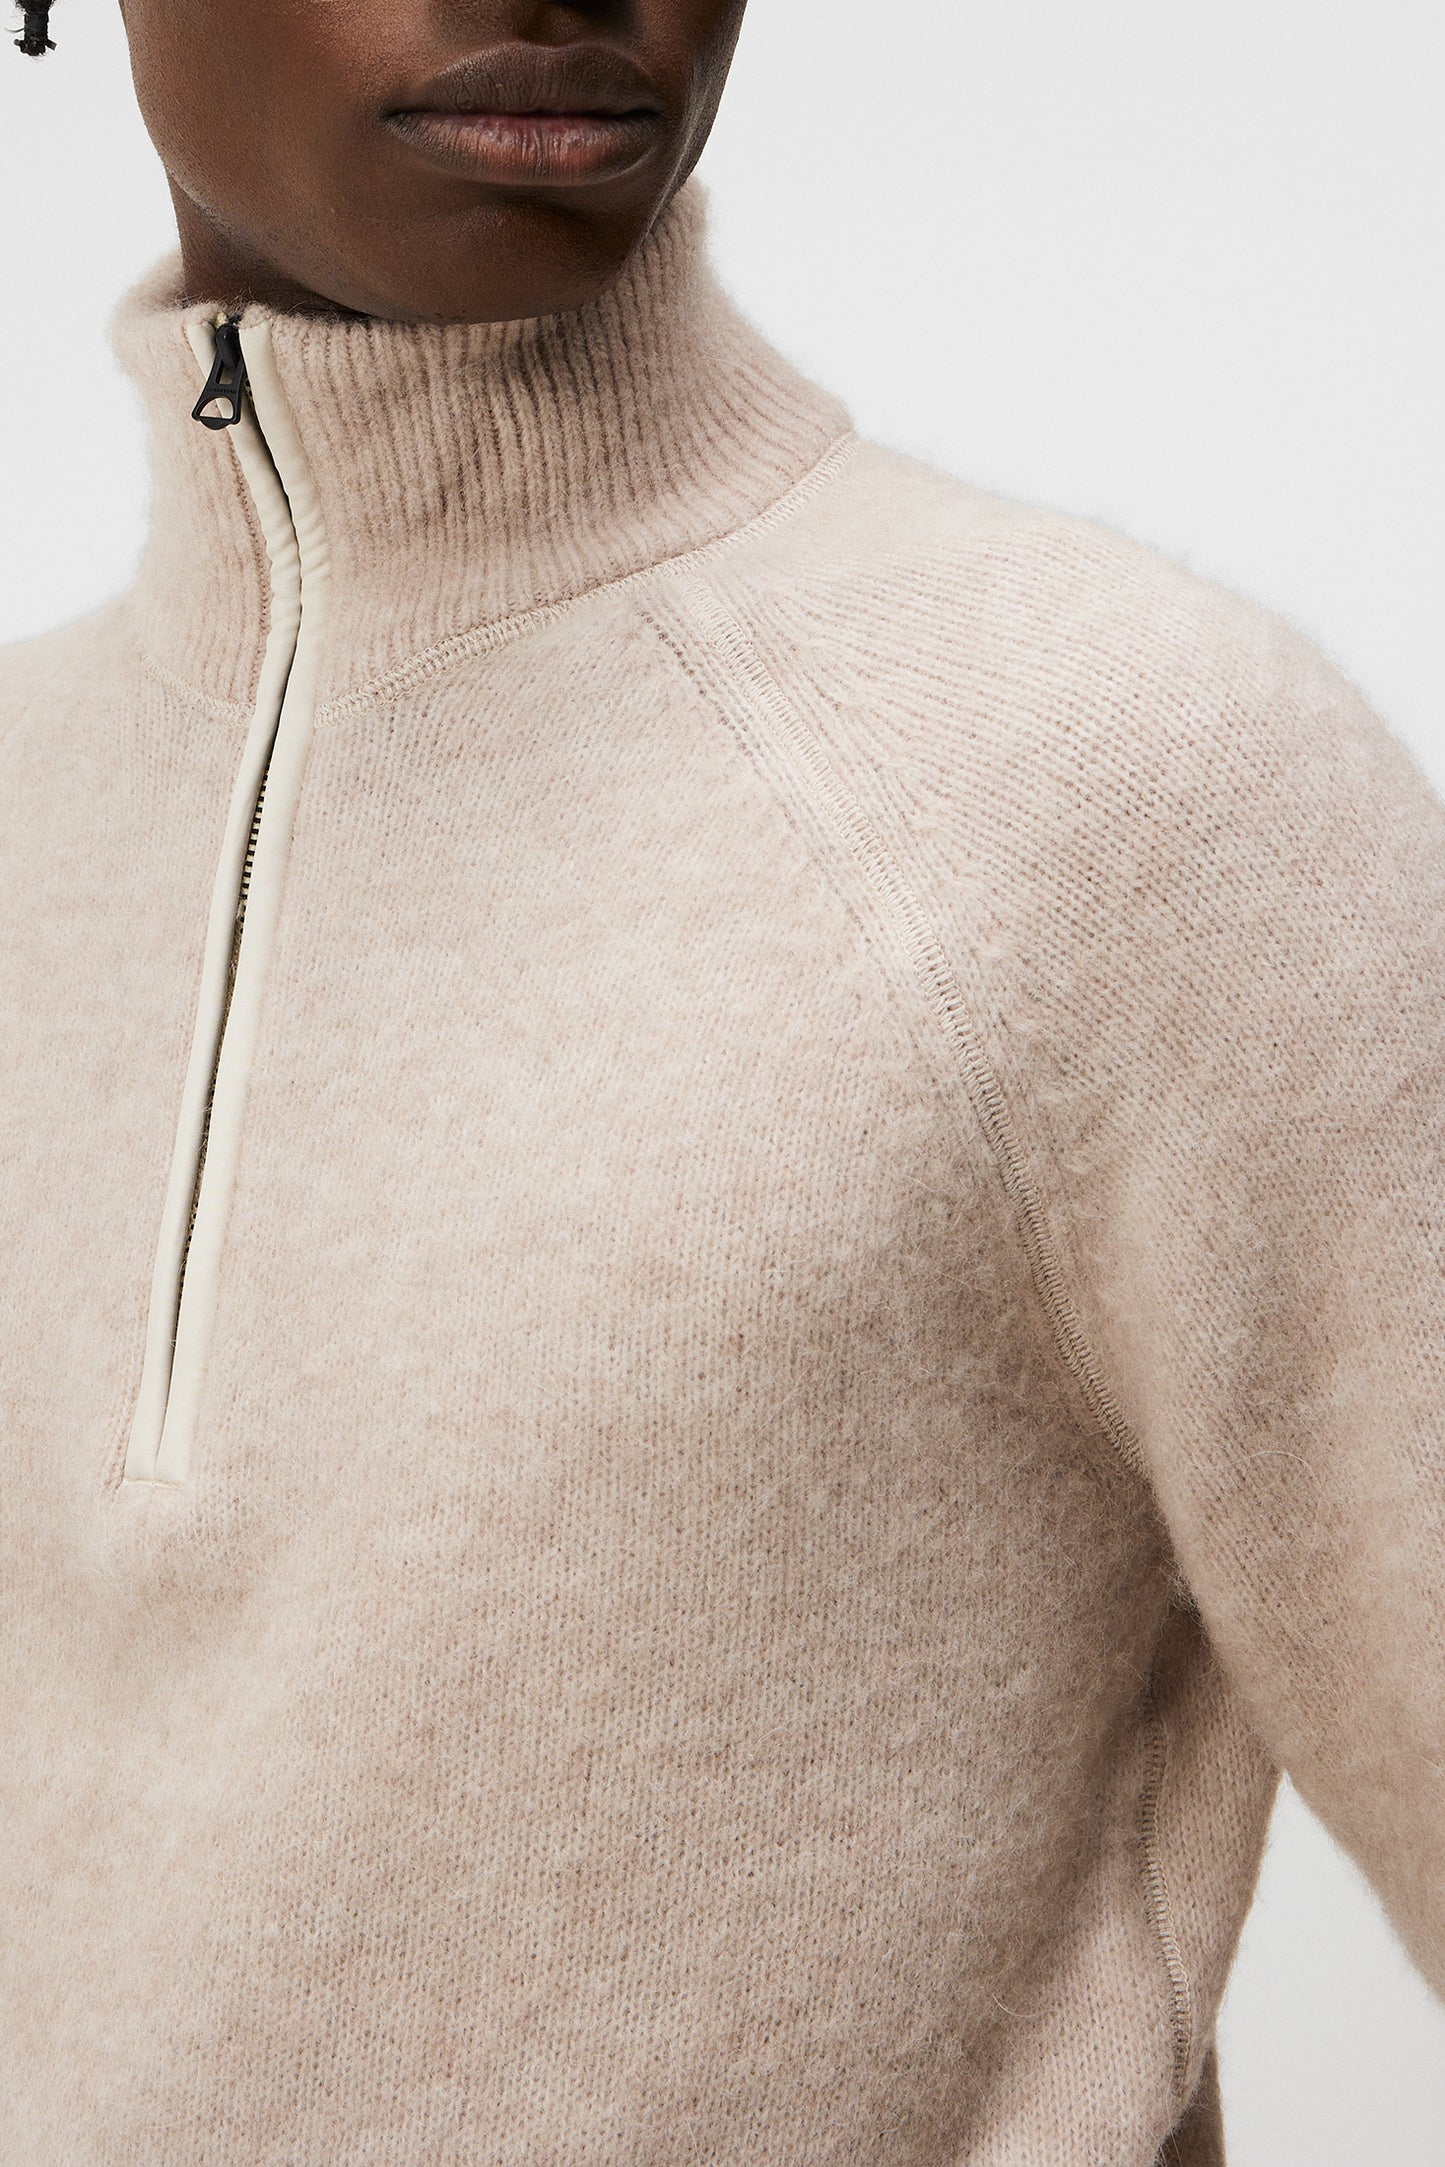 Wilton Half Zip Sweater / Oyster Gray